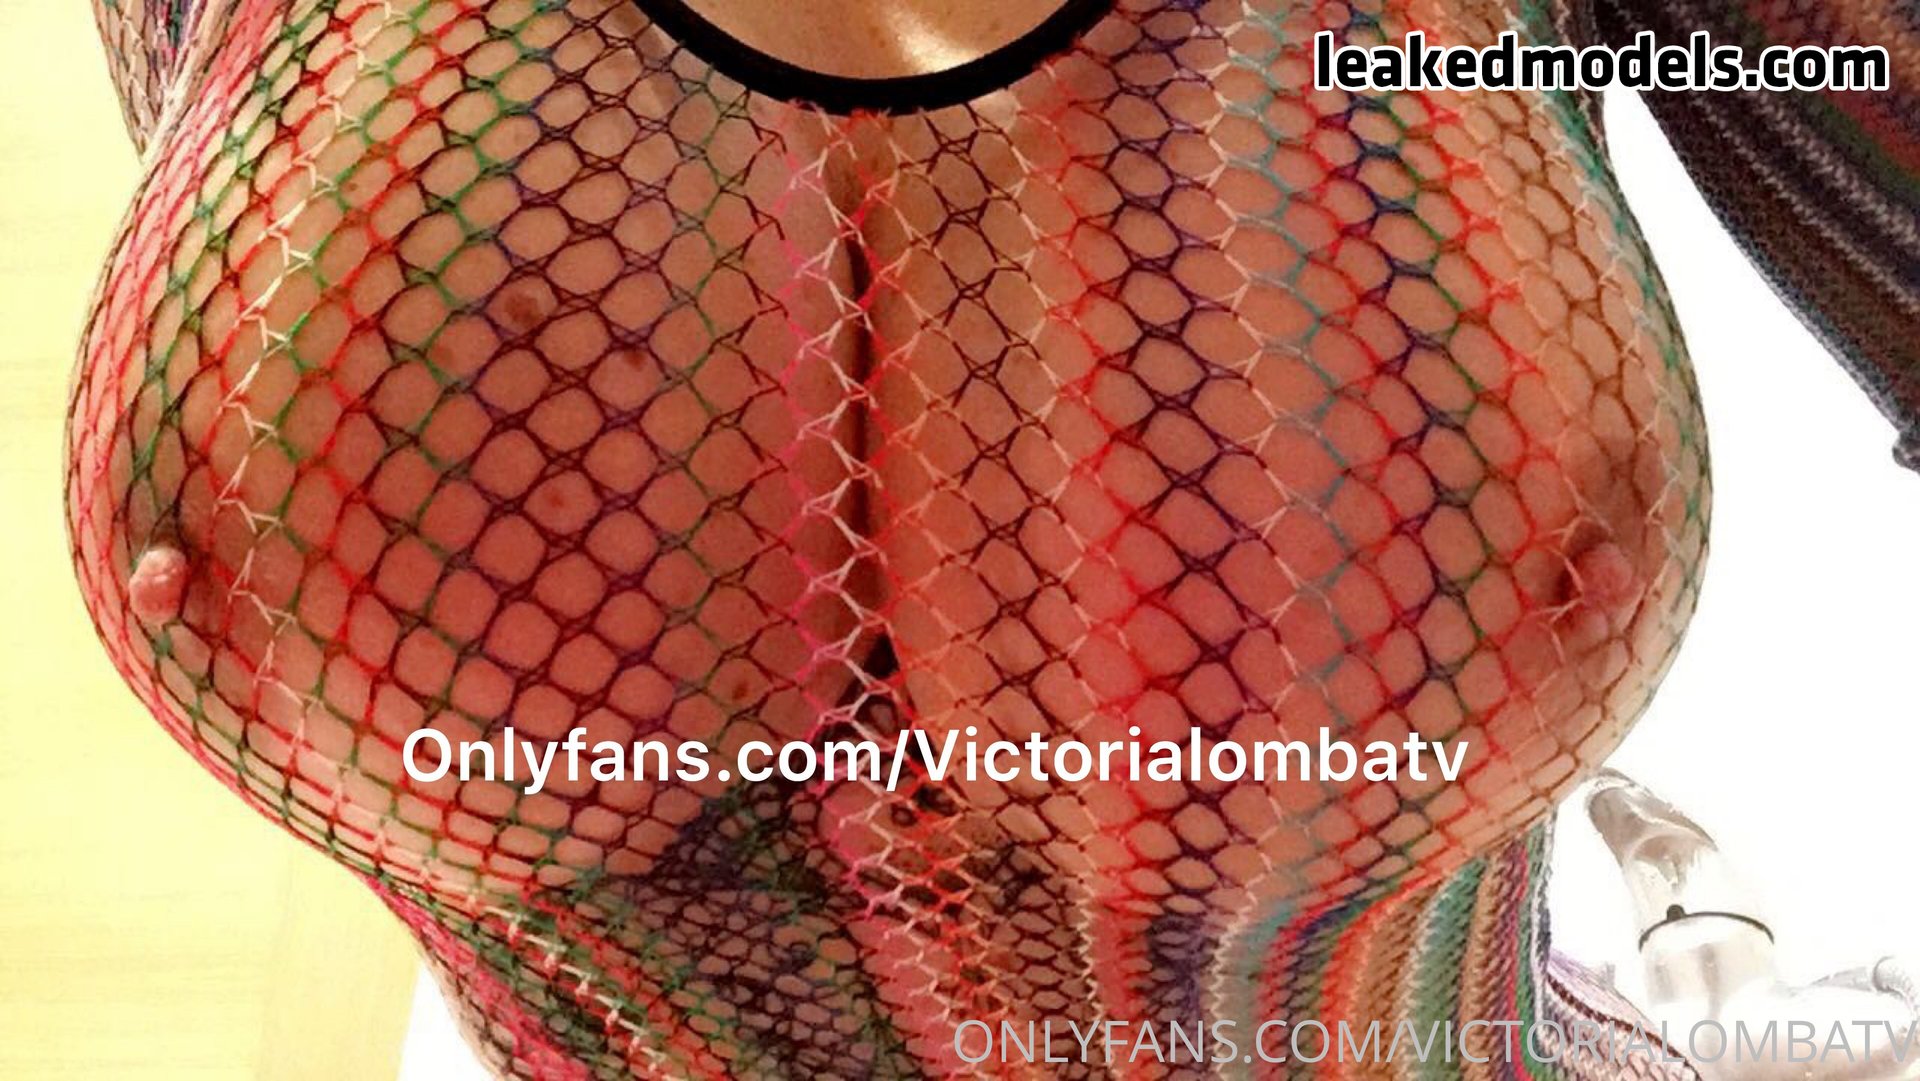 victorialombatv nude leaks leakedmodels.com 056 - Victoria Lomba – victorialombatv OnlyFans Leaks (85 Photos and 7 Videos)